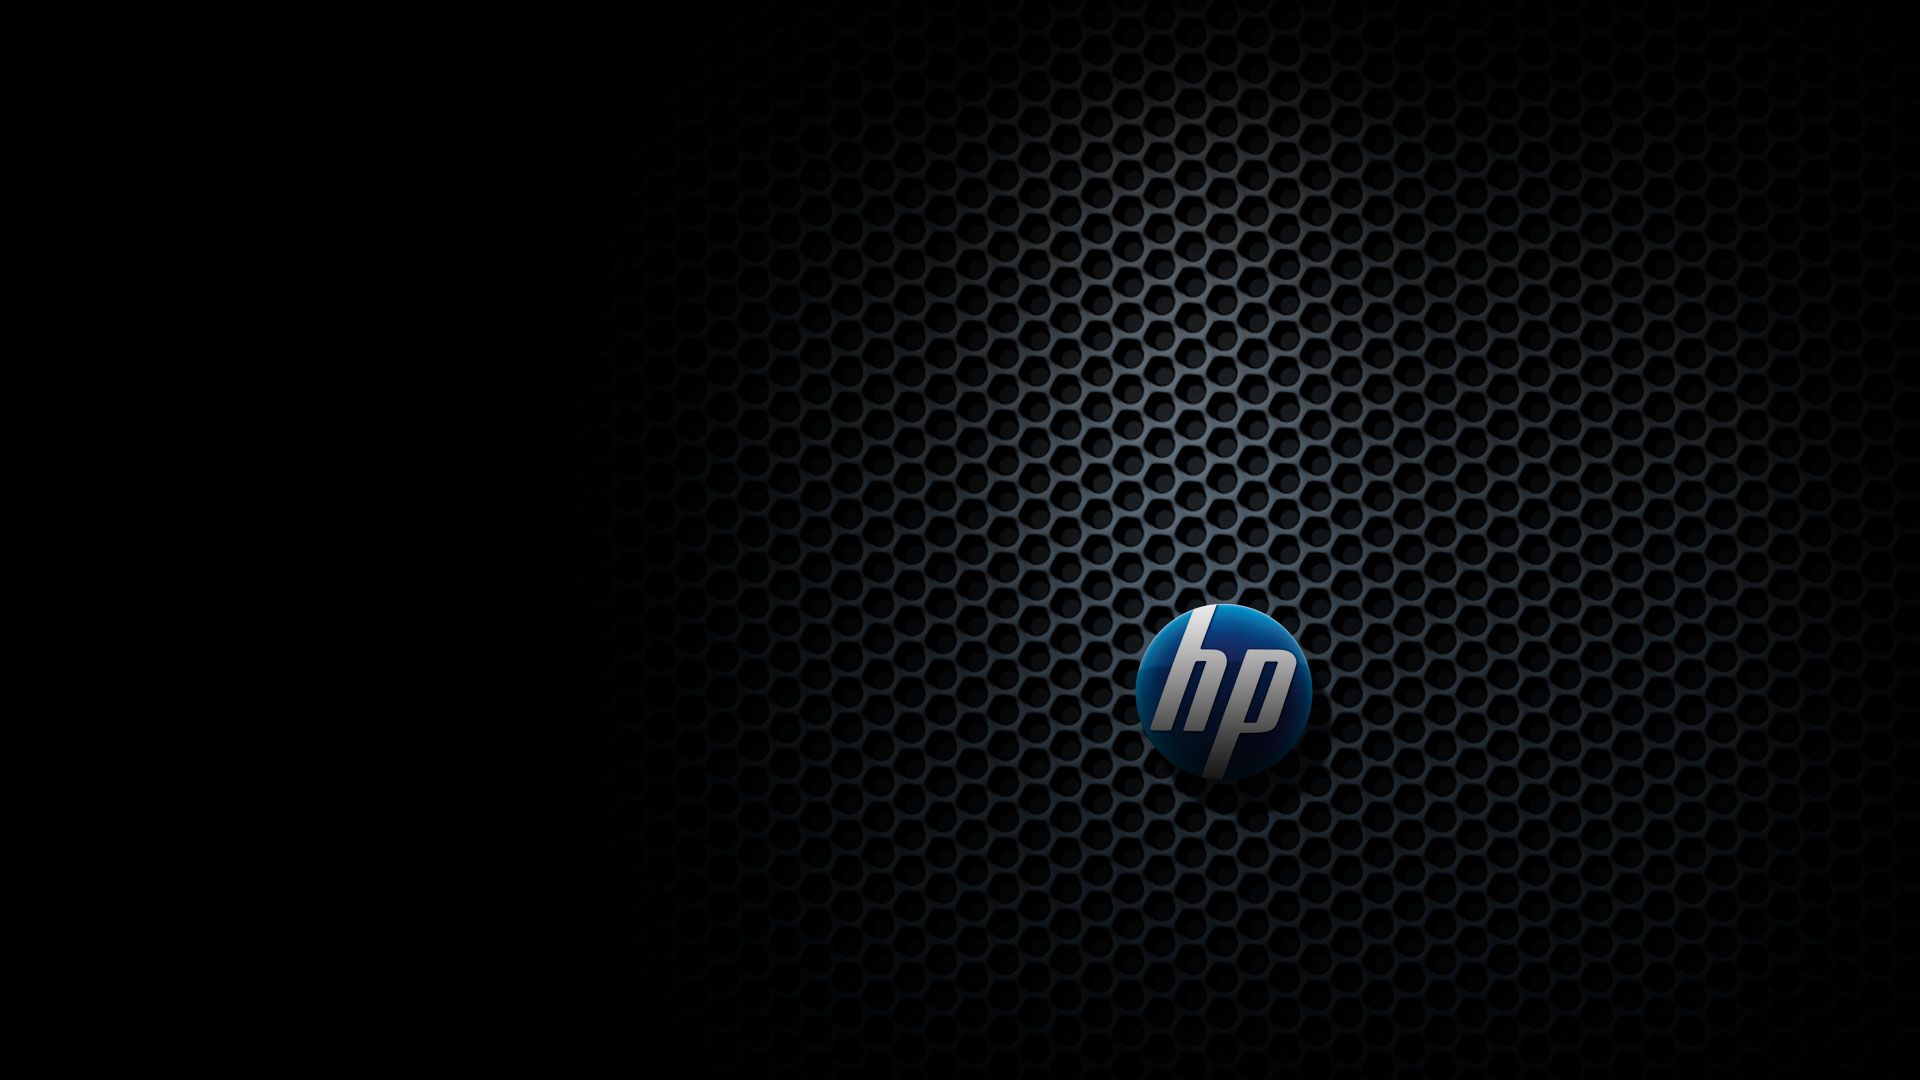 hp desktop wallpapers hd 1080p Desktop Backgrounds for Free HD